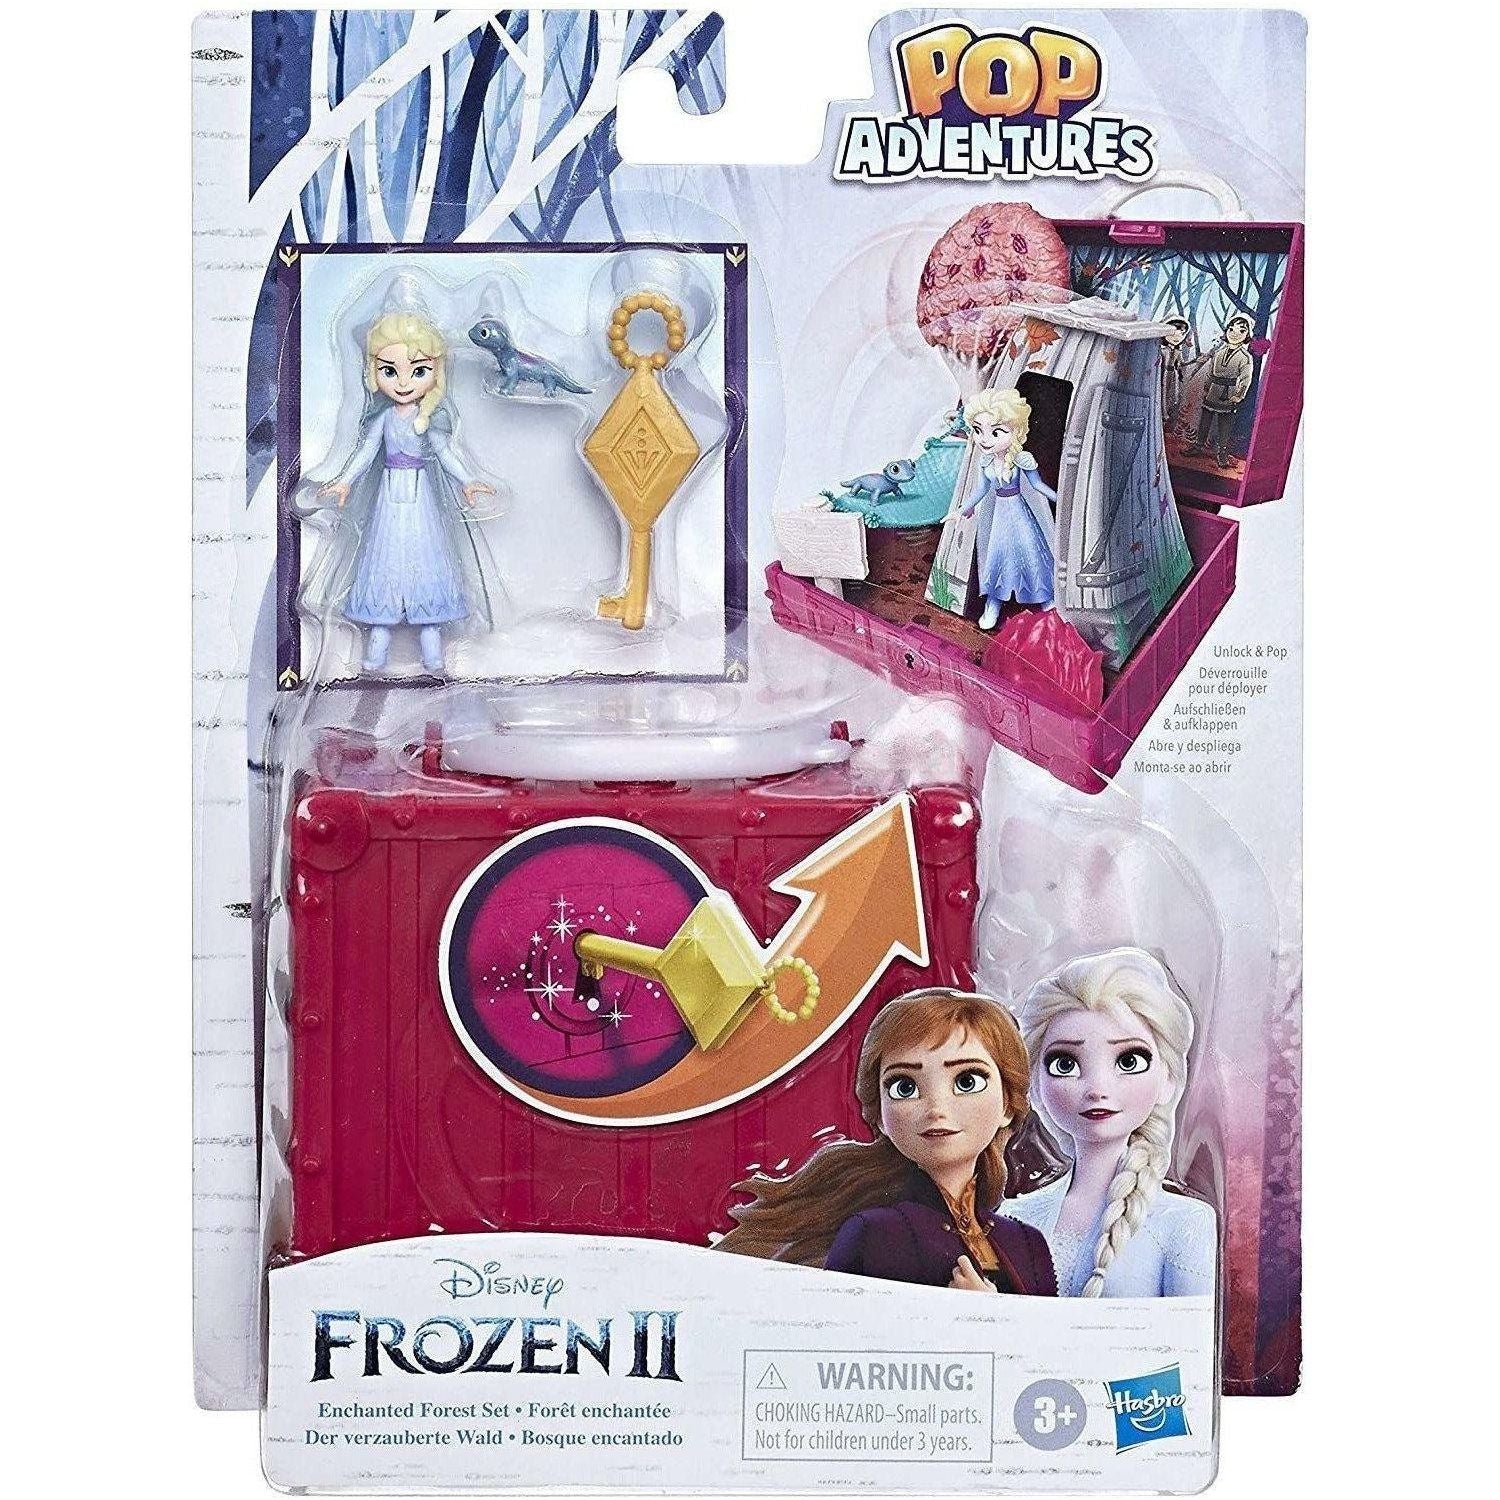 Disney Frozen Pop Adventures Enchanted Forest PlaySet Pop-Up With Handle, Including Elsa - BumbleToys - 4+ Years, 5-7 Years, Elsa, Frozen, Girls, Miniature Dolls & Accessories